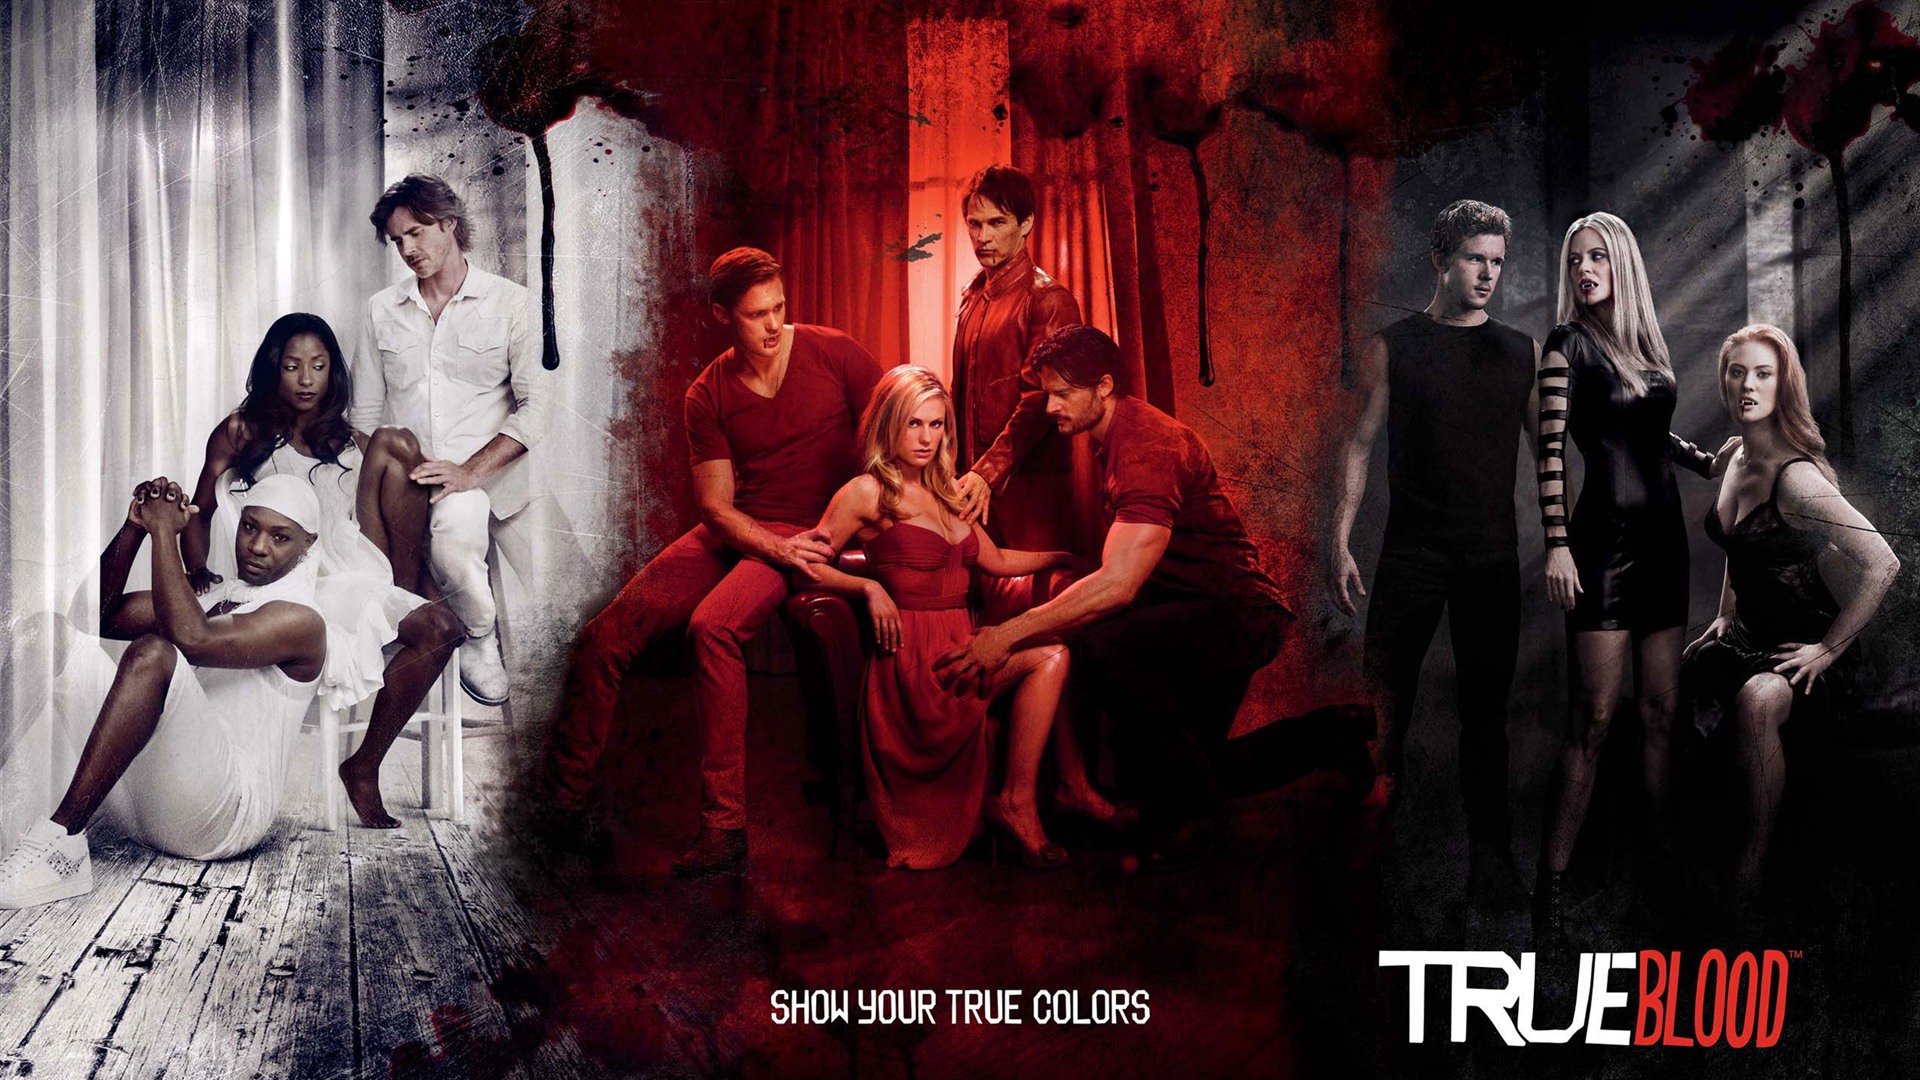 True Blood Tv Series Hd Wallpapers - True Blood Show Your True Colors - HD Wallpaper 